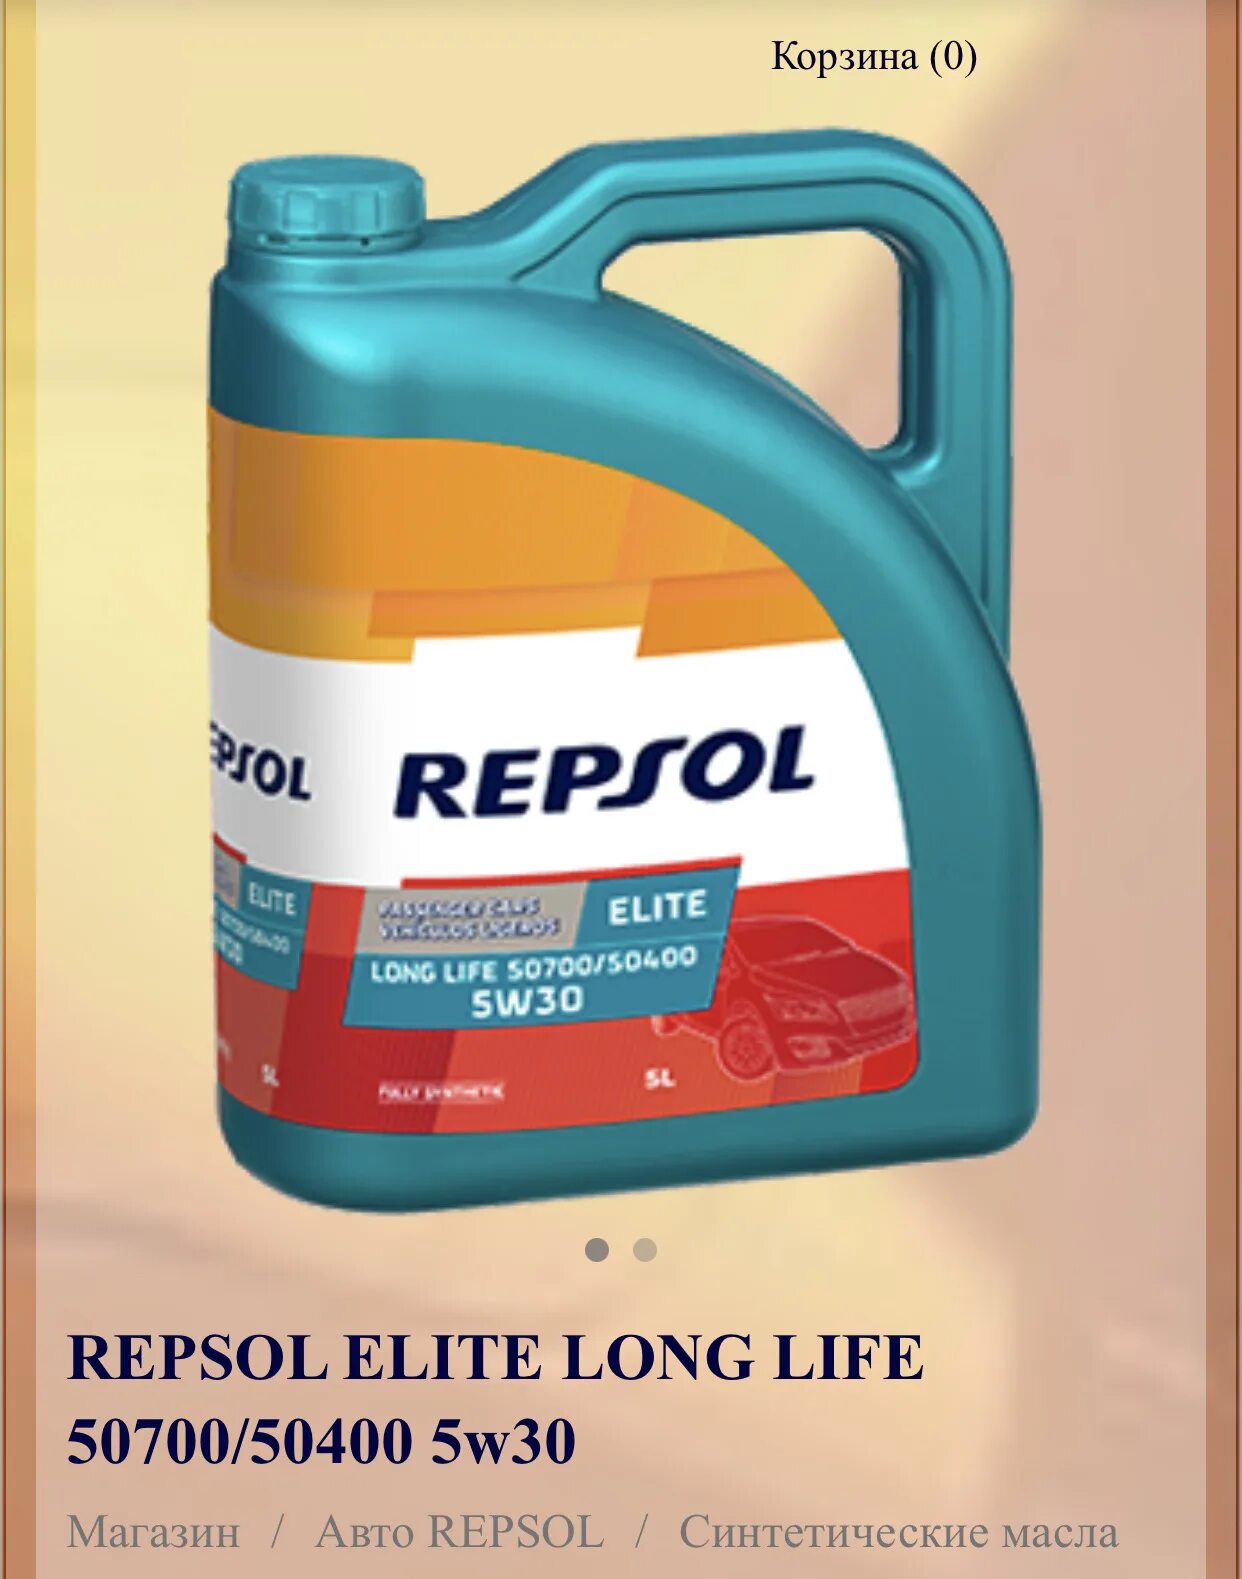 Масло repsol elite long life 5w30. Repsol Elite long Life 50700/50400 5w30. Repsol Evolution long Life 5w30. Repsol Evolution 5w30. Repsol 5w30 504.